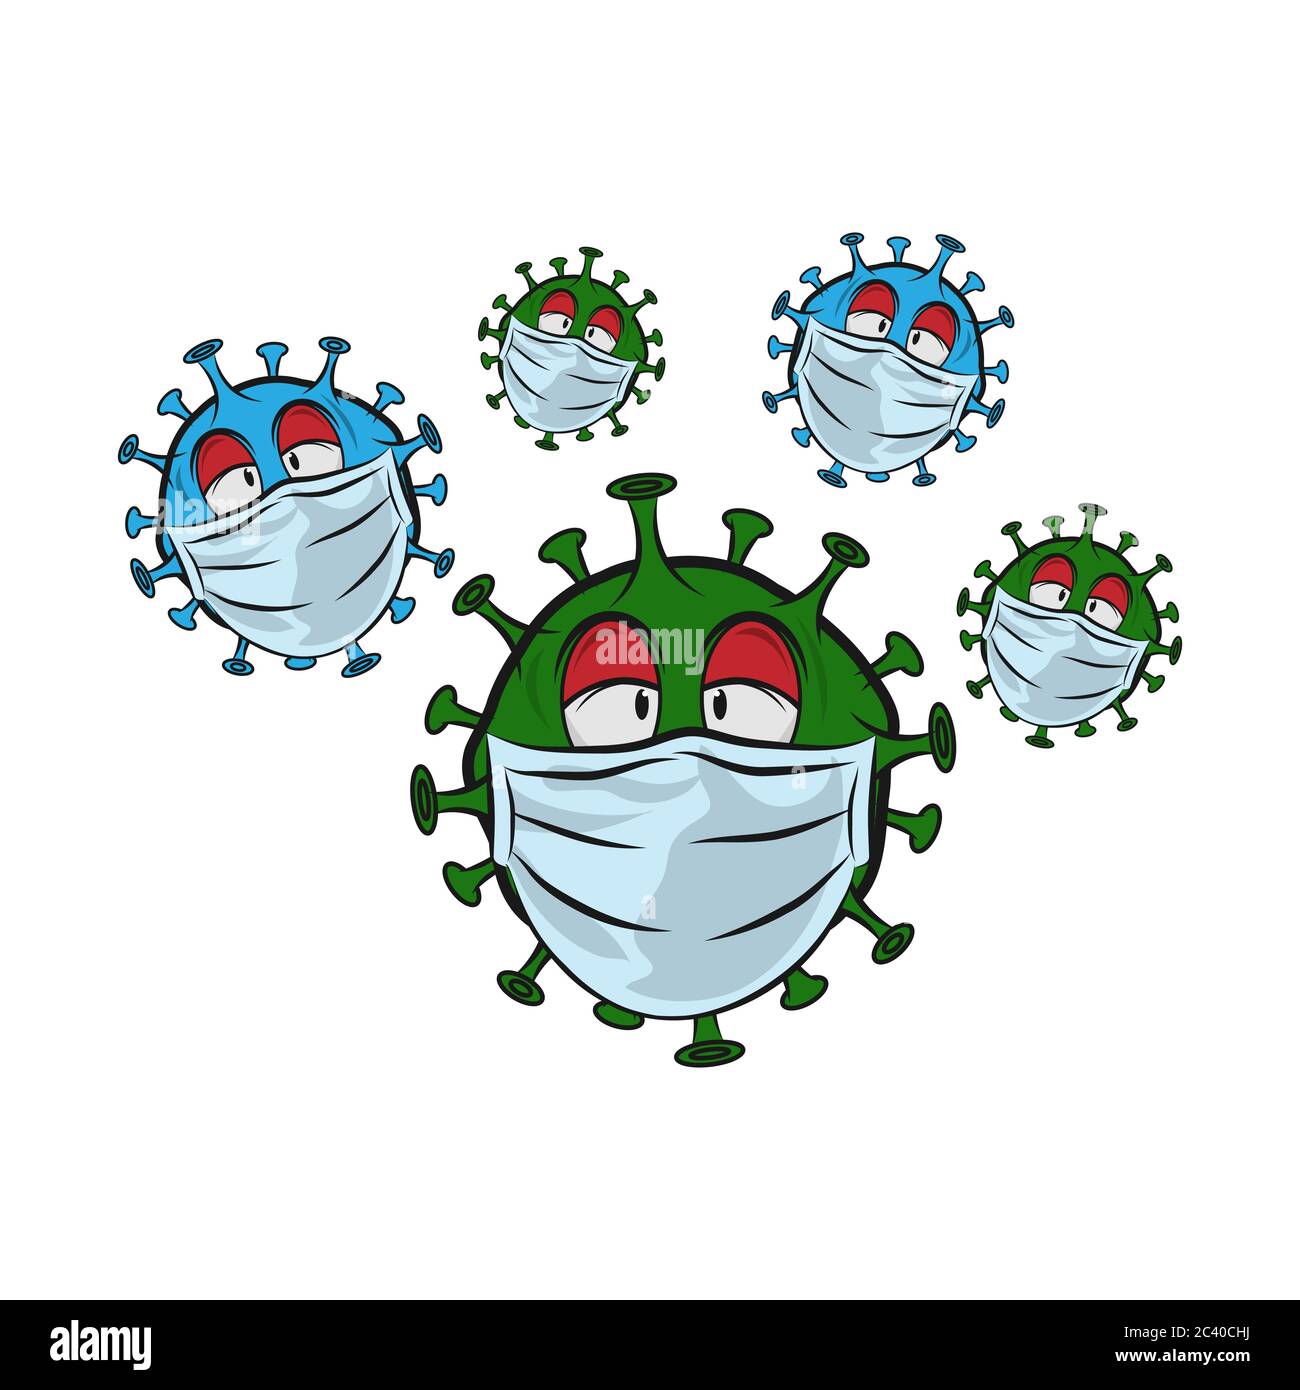 logo corona virus monster characters, covid-19 monsters. outbreak virus logo. Corona virus symbol logo. Stock Vector